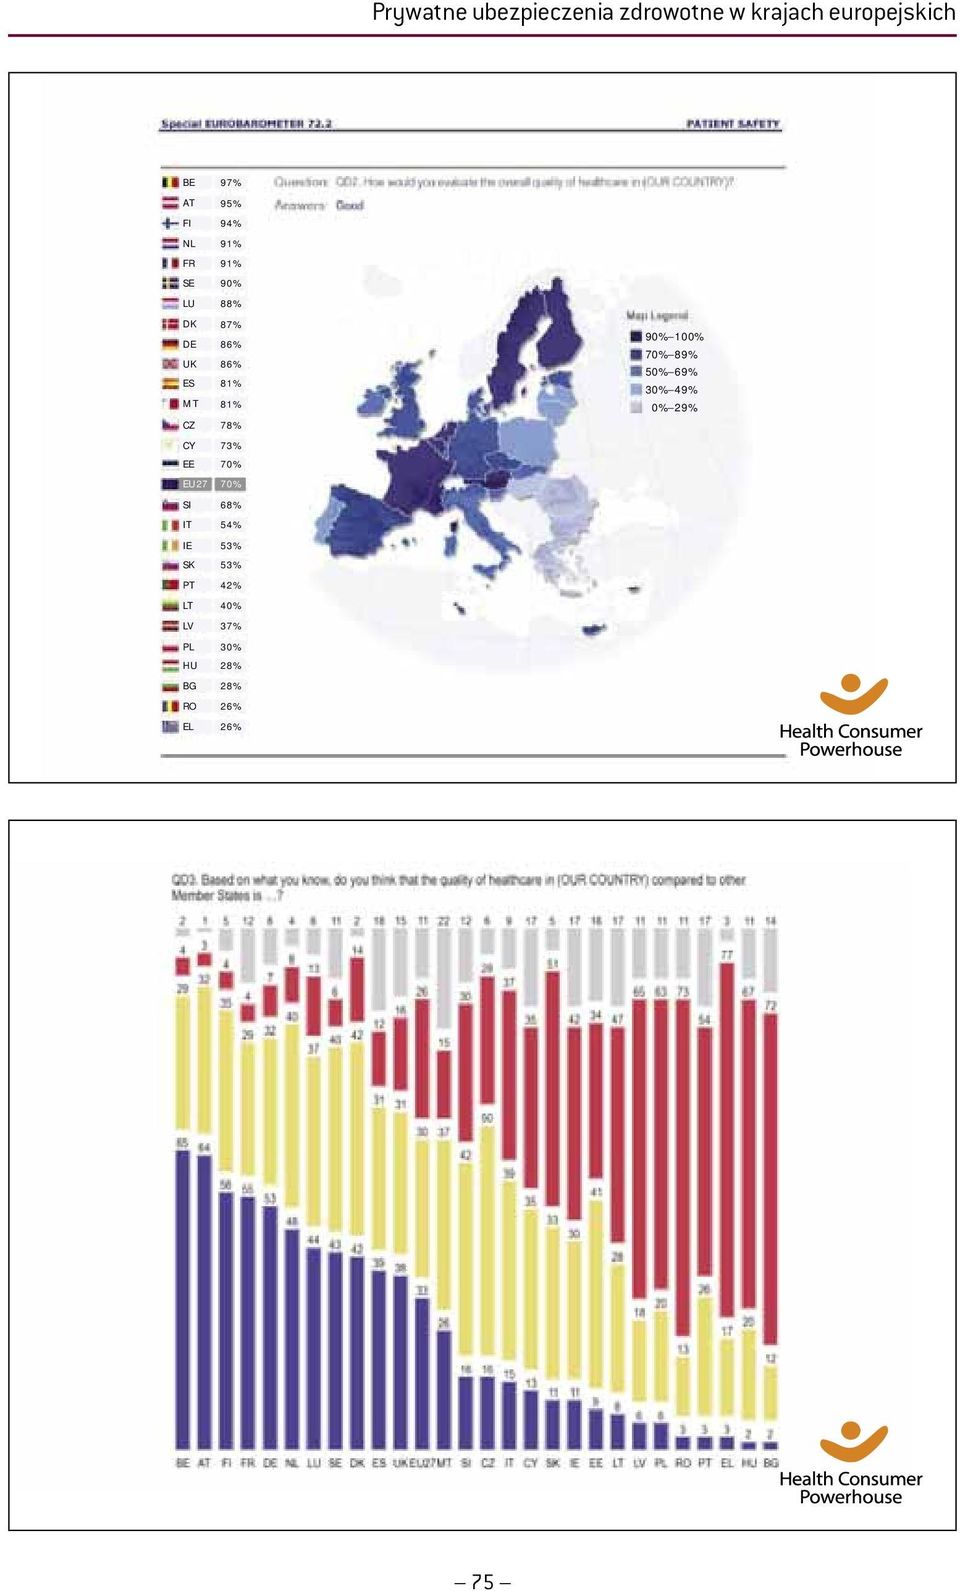 CY 73% EE 70% EU27 70% SI 68% IT 54% IE 53% SK 53% PT 42% LT 40% LV 37%